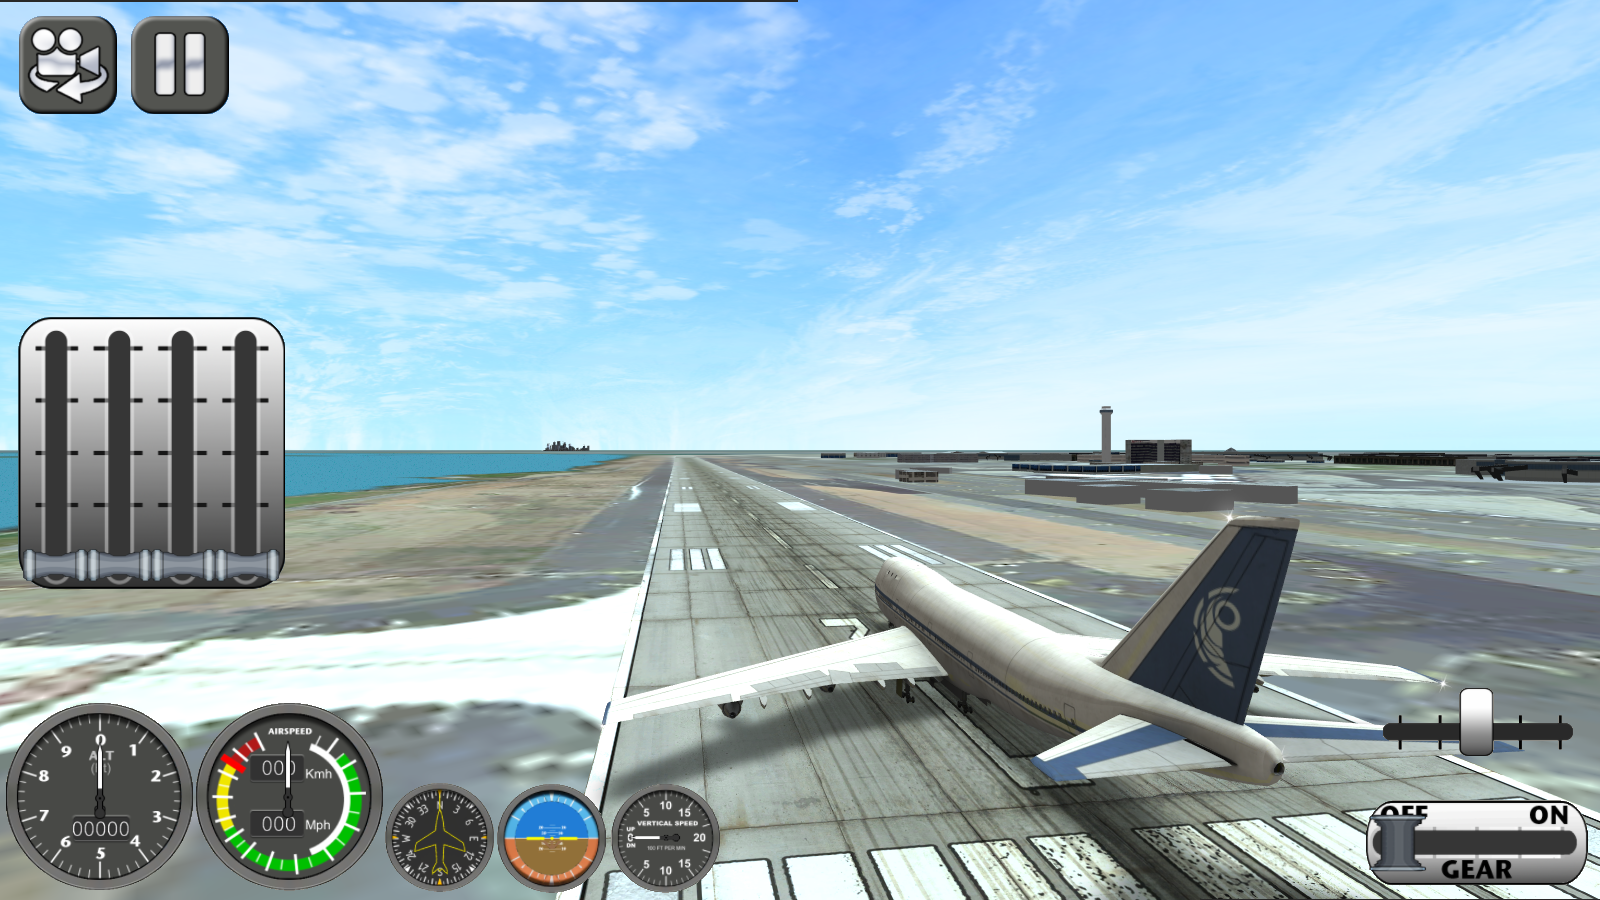 Много игр про самолет. Игра Боинг симулятор. Летать на самолете игра. Реалистичная игра про самолеты. Симулятор полёта на самолёте.